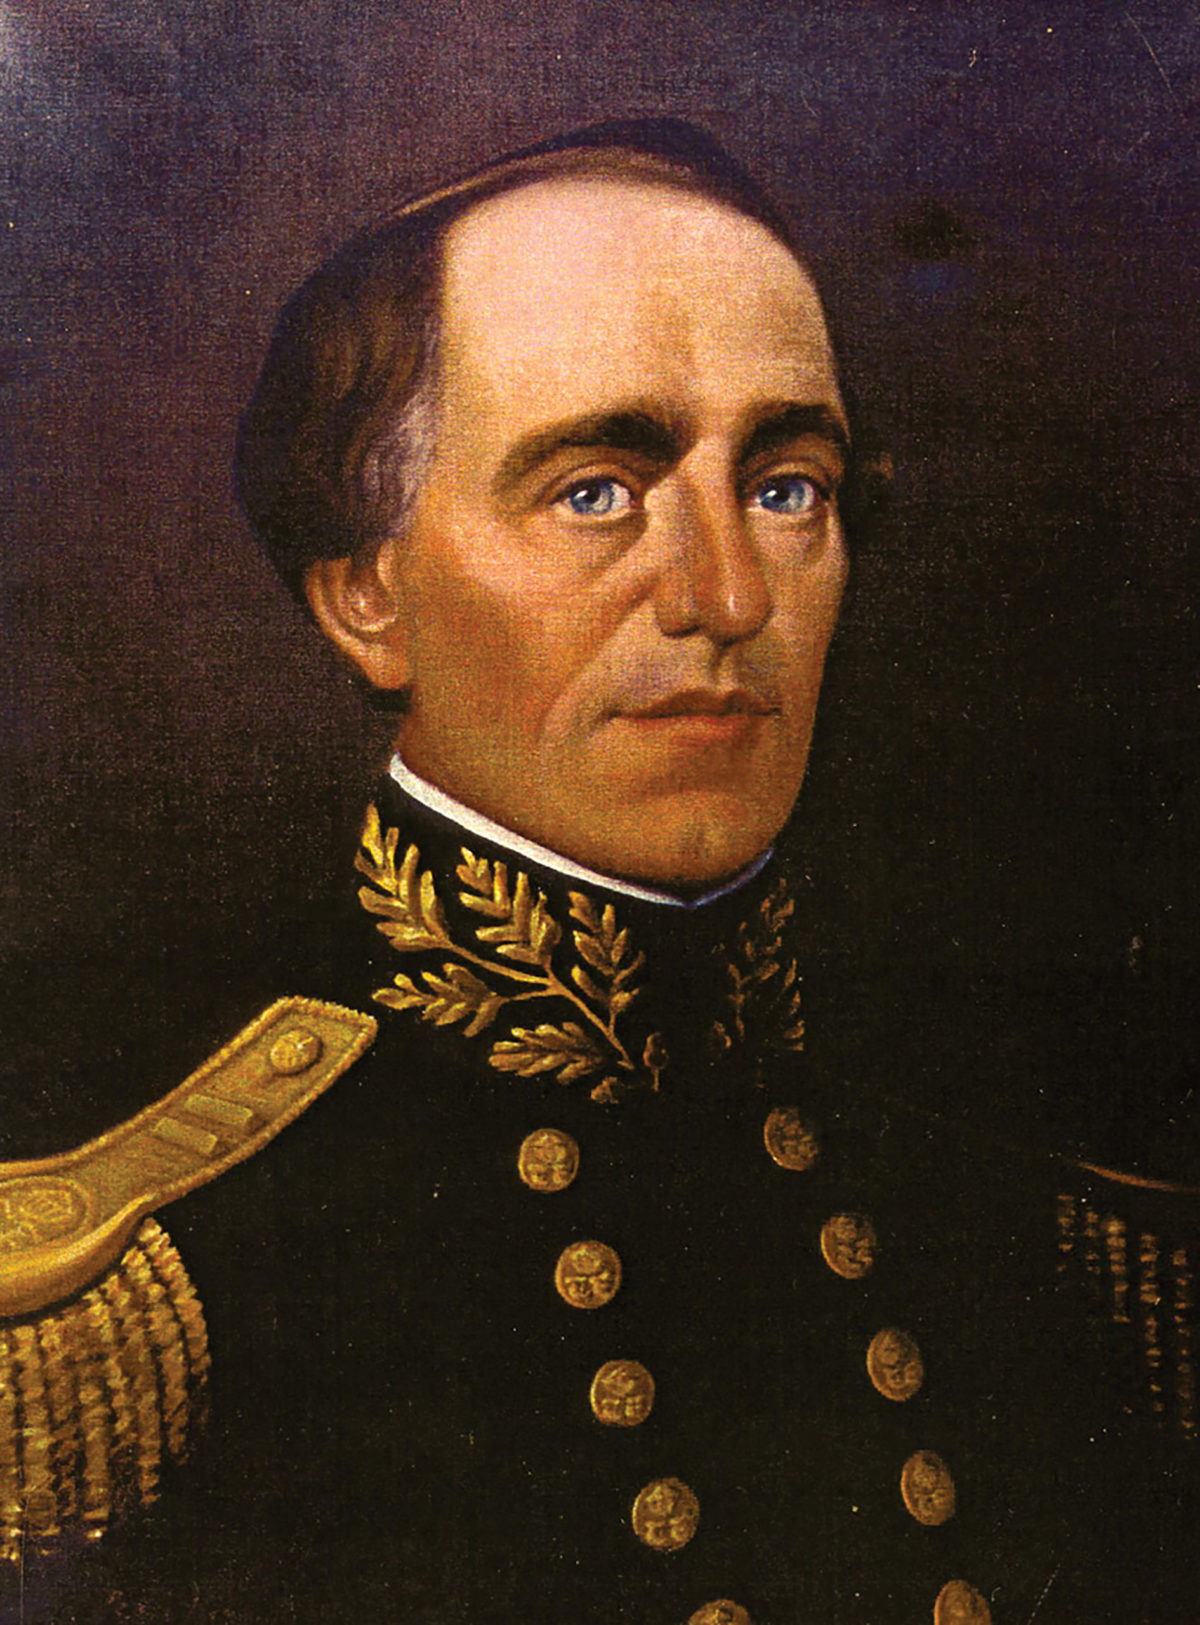 Captain John Williams Gunnison